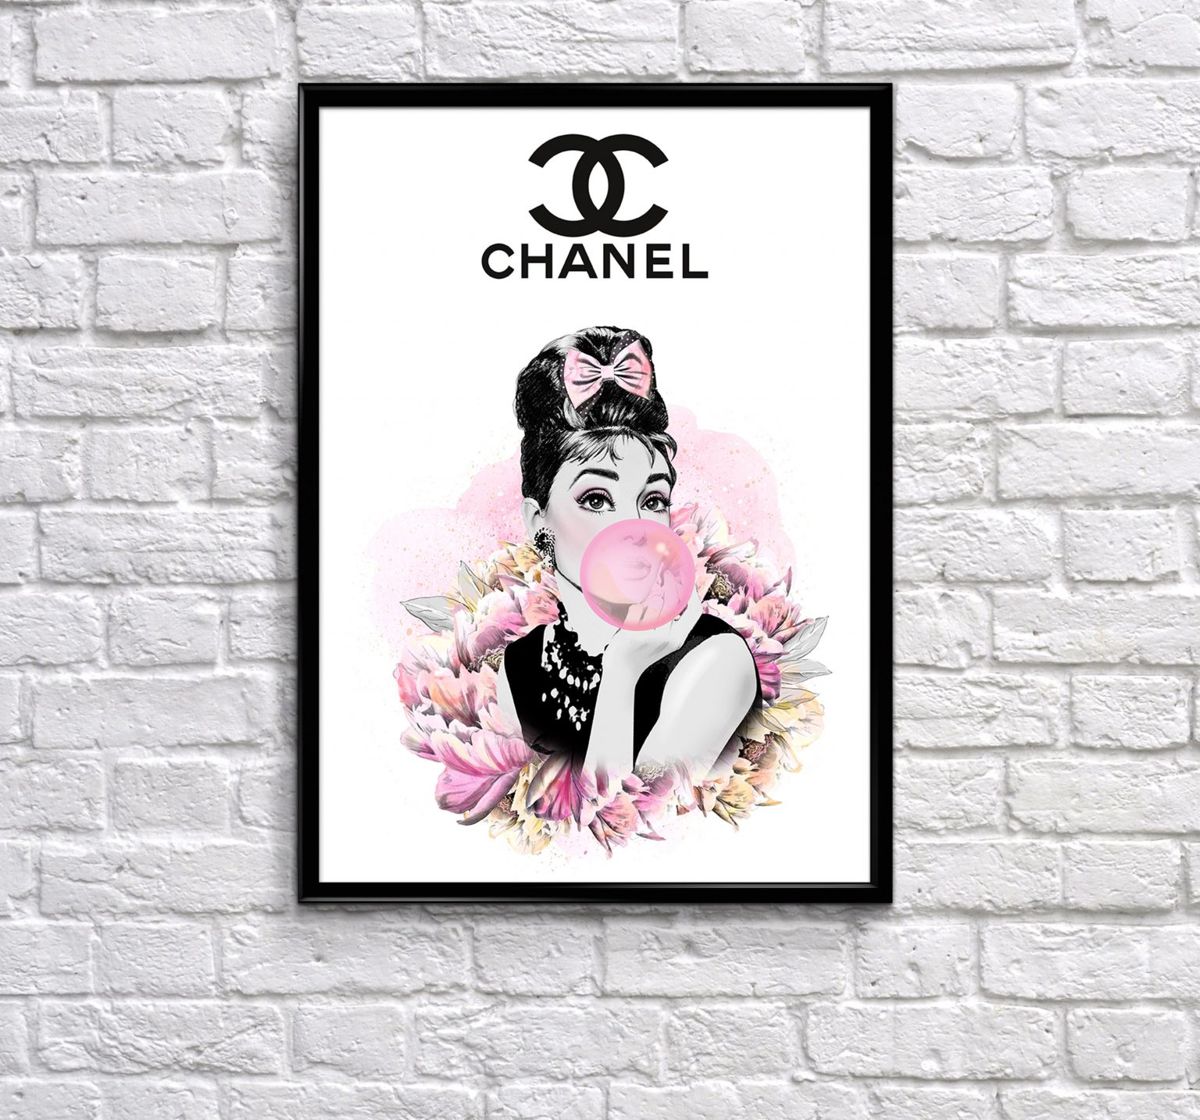 Audrey Hepburn Wall Art, Chanel Home Decor, Chanel, Chanel Art, Fashion